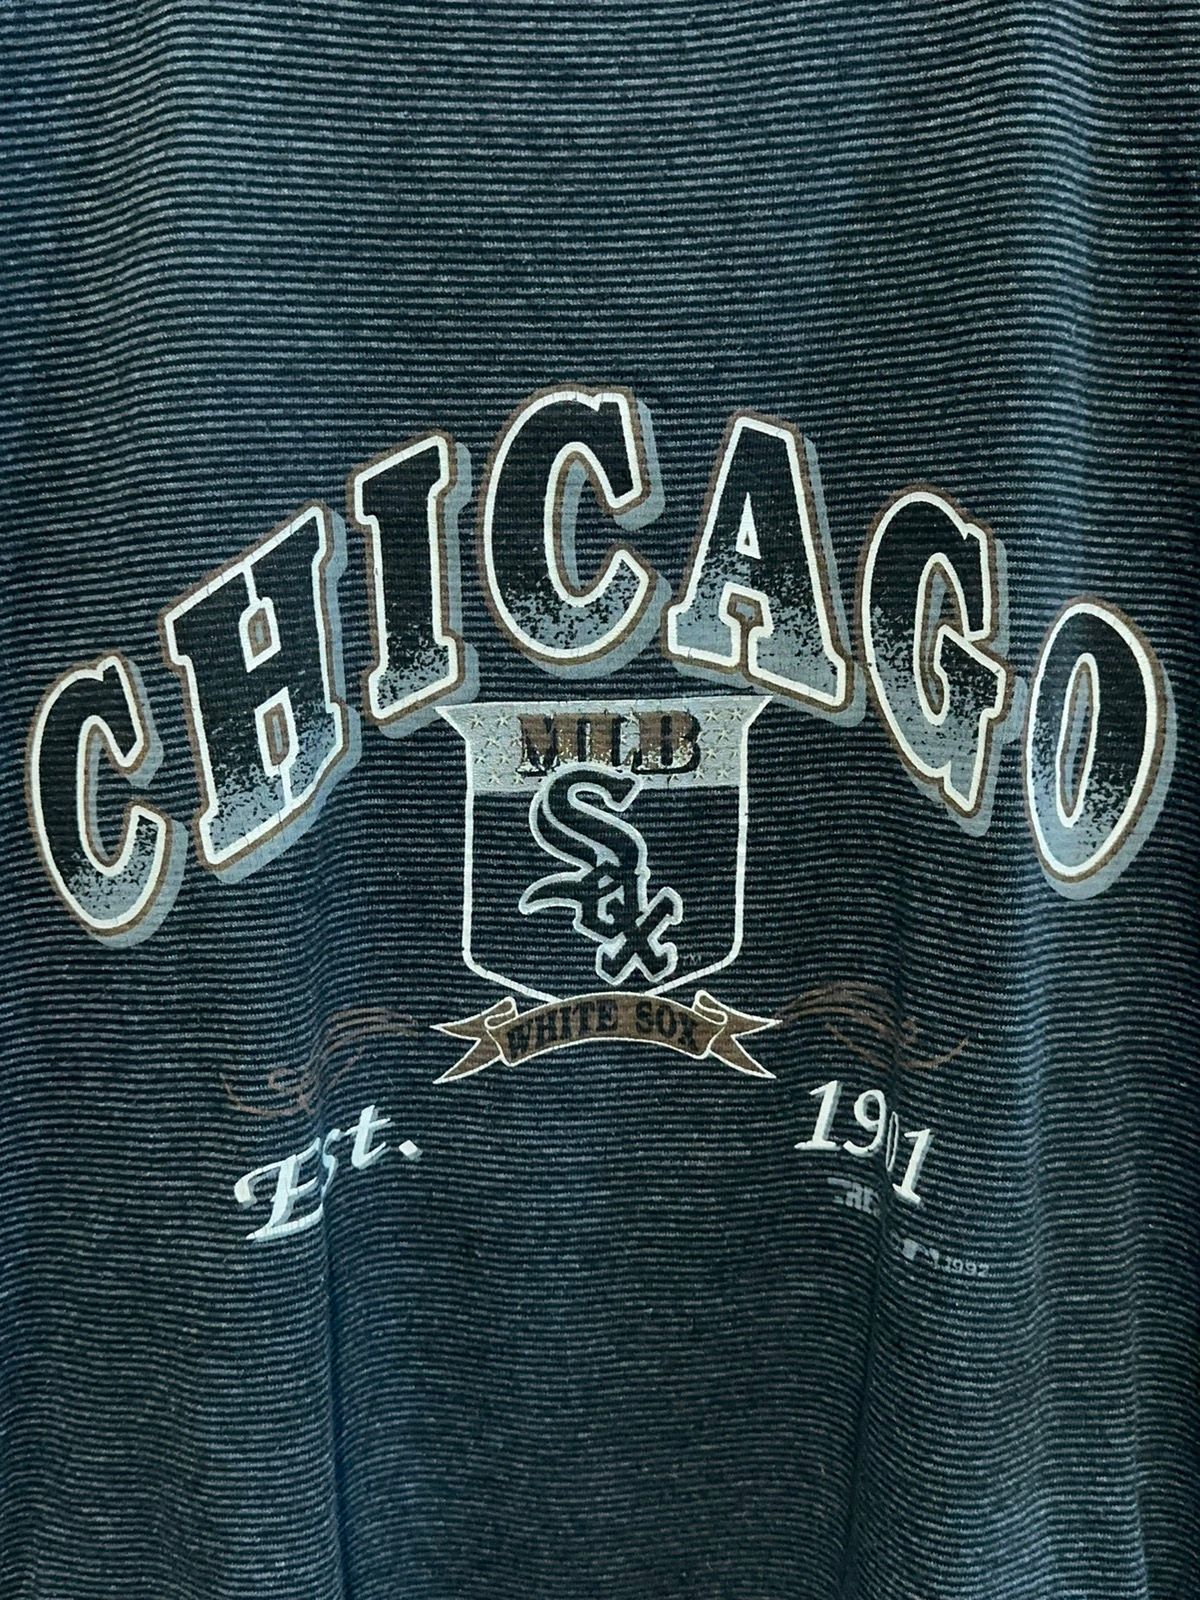 Vintage Chicago White Sox Baseball Tee XL - 3